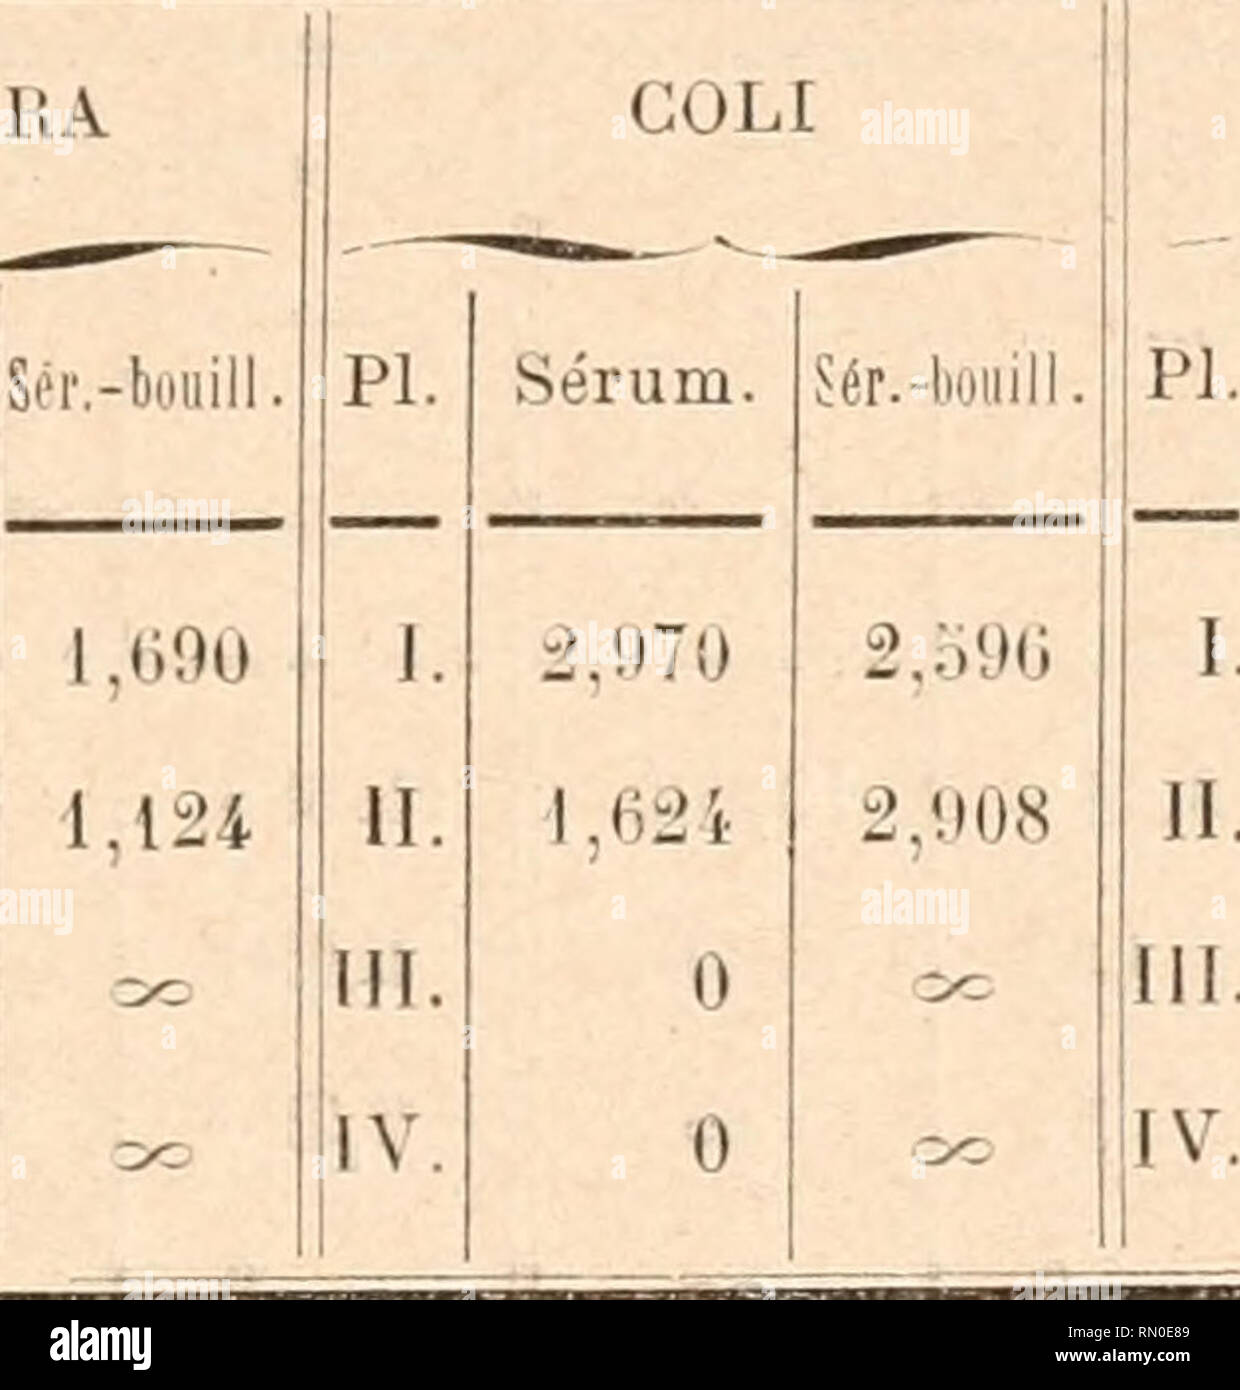 . Annales de l'Institut Pasteur. Science; Allergy and Immunology; Medicine; Microbiology. CHOLERA PI Sérum I. 1.918 II. 631 [11. 0 IV. 0. TYPHUS Sérum. 2.417 il1.» I) 0 Sér.-bouill. 2,630 1,520 cm EN CHOLÉIiA Plaques. S';i'um. Sériim-ti&quot;iiill&quot;ii. I. l,52'i 1.60'.) II. 1,282 1,627 111. 31'J oo IV. 0 Cette expérience montre que des microbes peuvent parfai- tement se multiplier dans un mélangea parties égales de sérum. Please note that these images are extracted from scanned page images that may have been digitally enhanced for readability - coloration and appearance of these illustrati Stock Photo